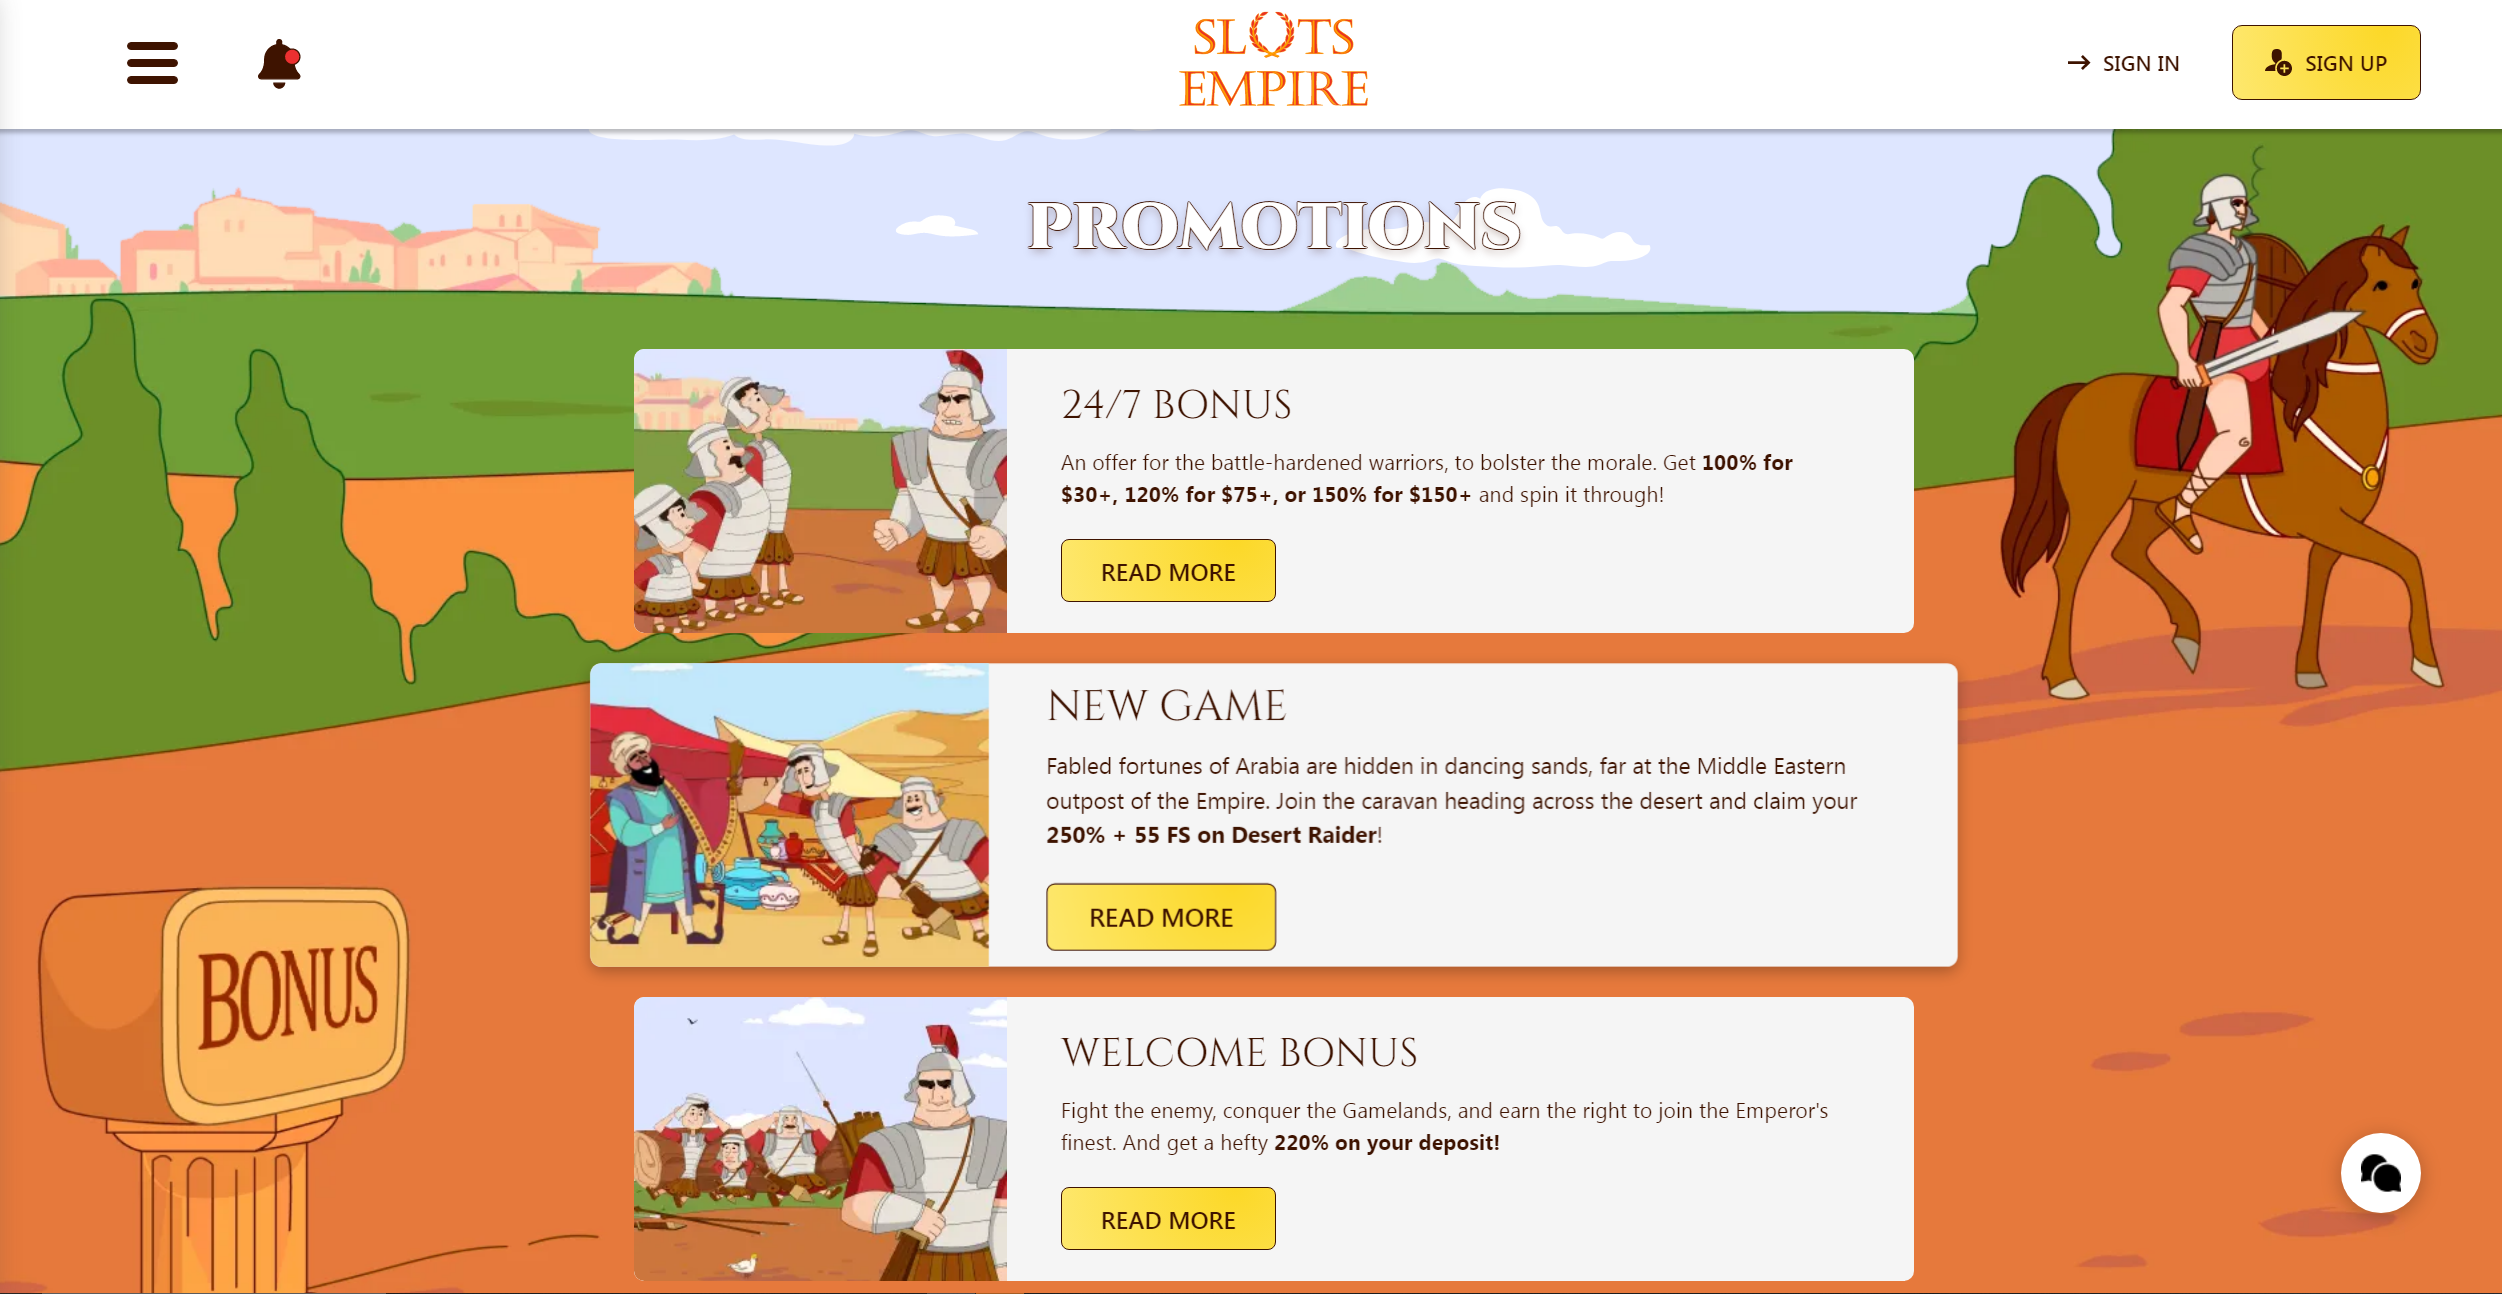 Slots Empire Casino Promotions 